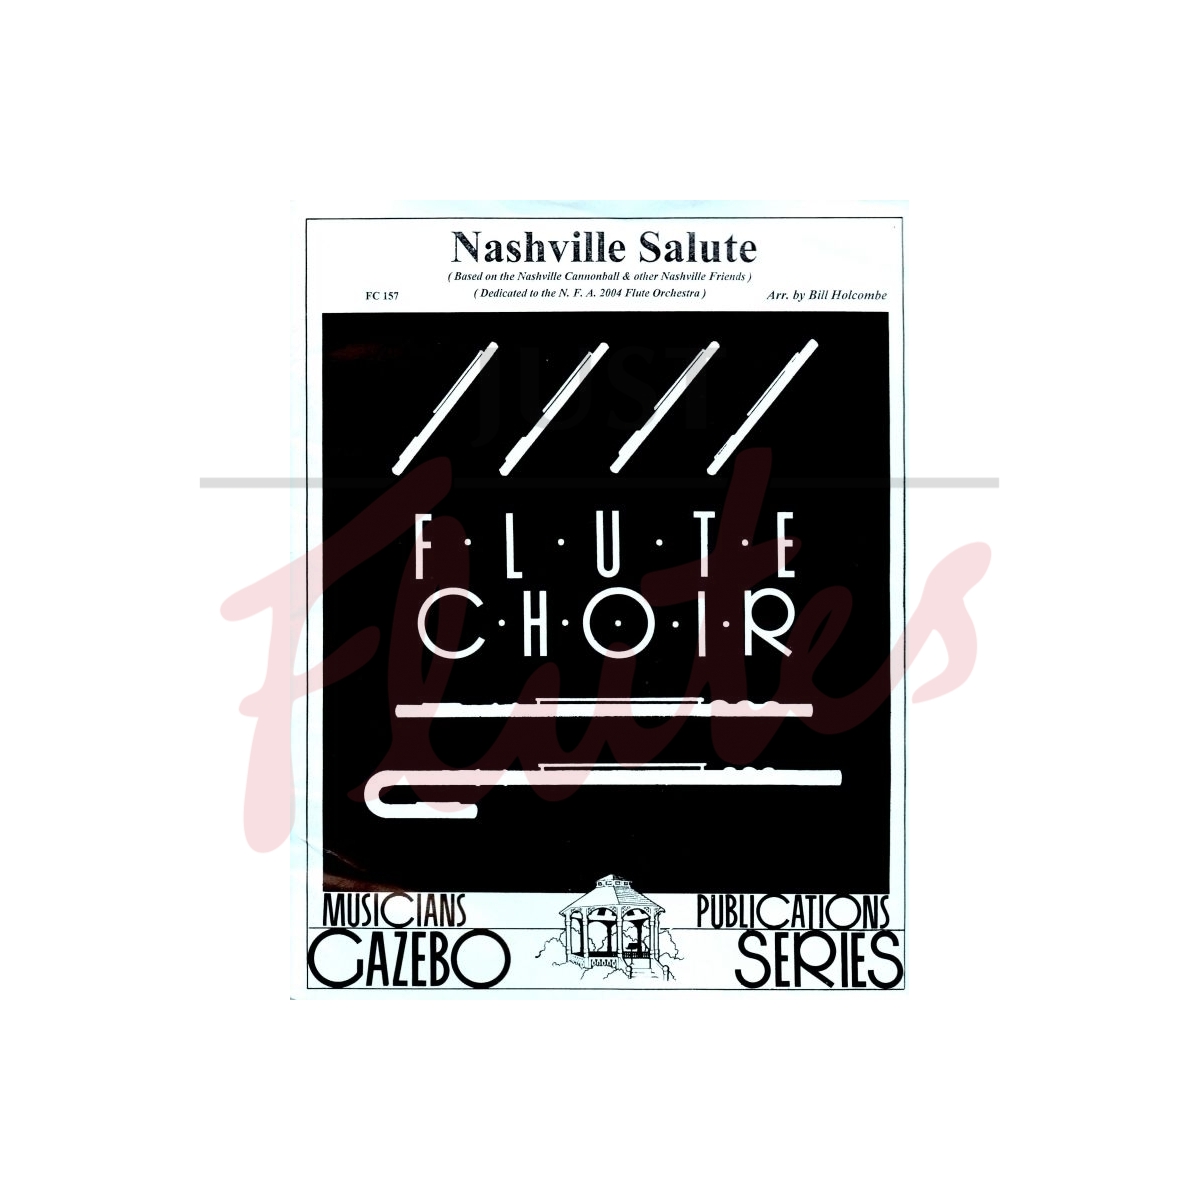 Nashville Salute [Flute Choir]